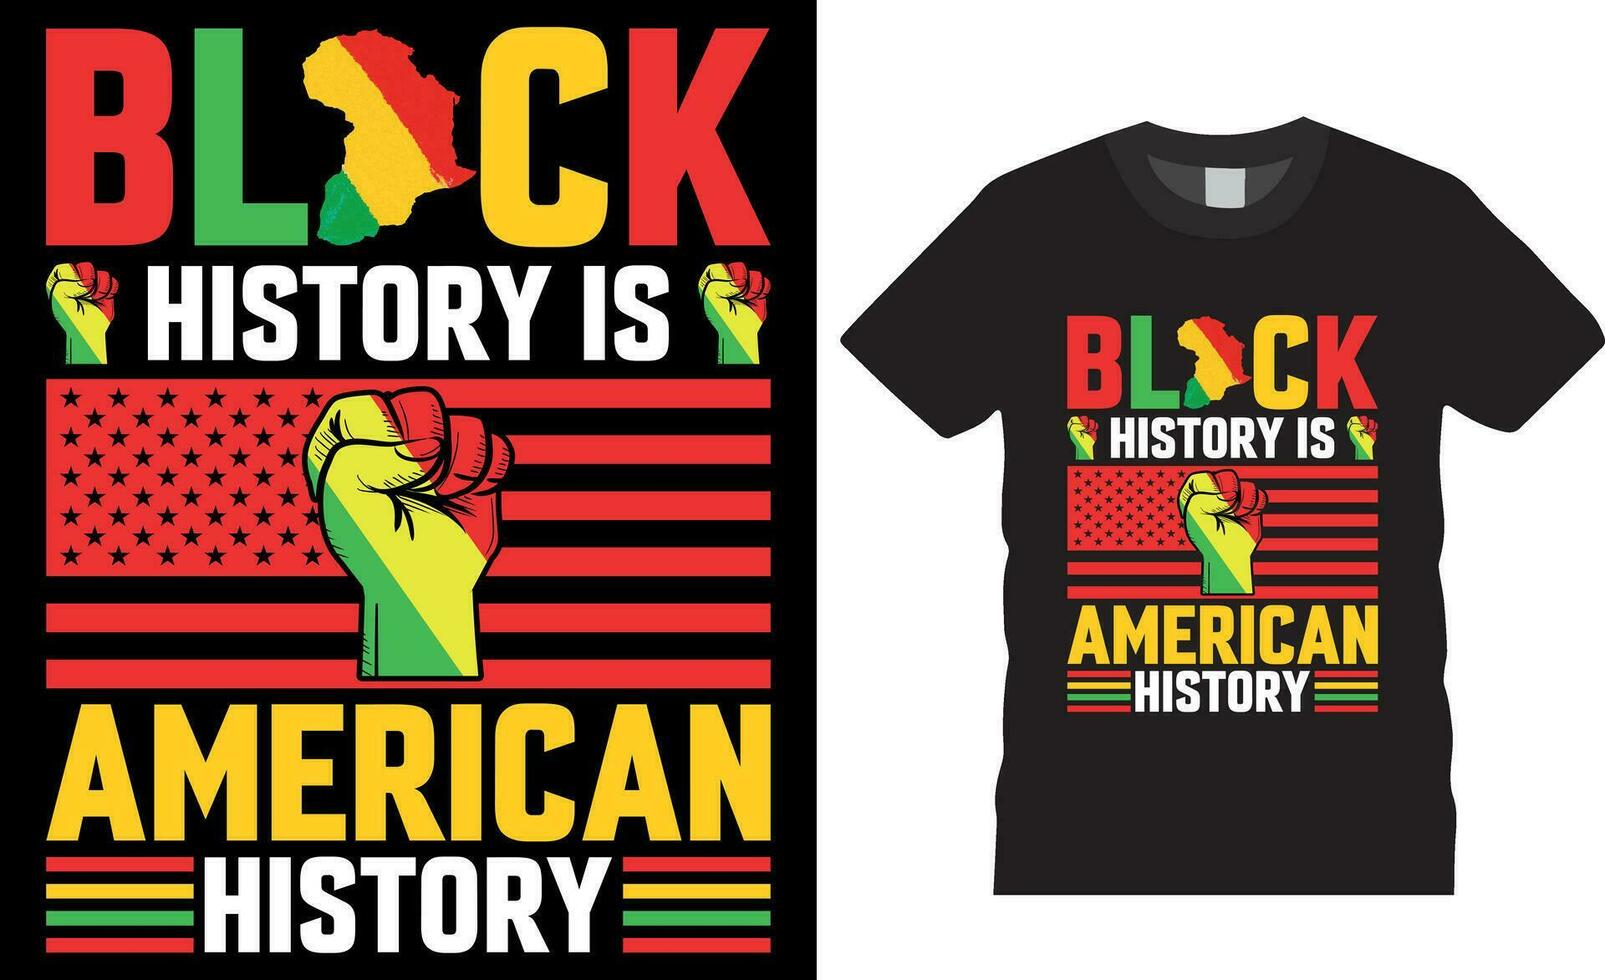 Black history is American history T-shirt Design Vector template.Black history is American history